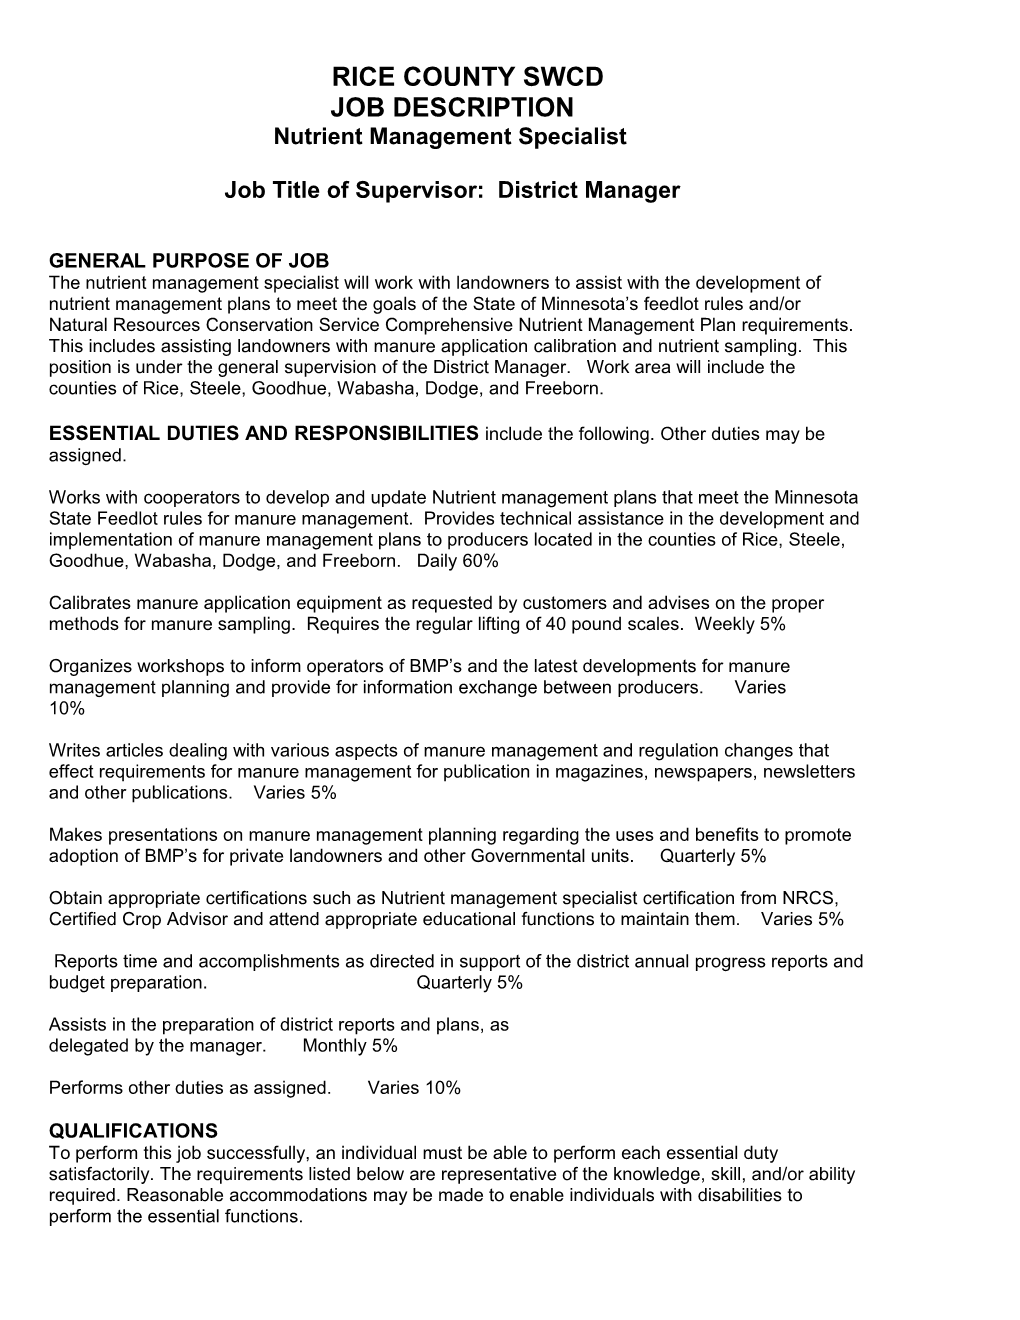 Job Title of Supervisor: District Manager